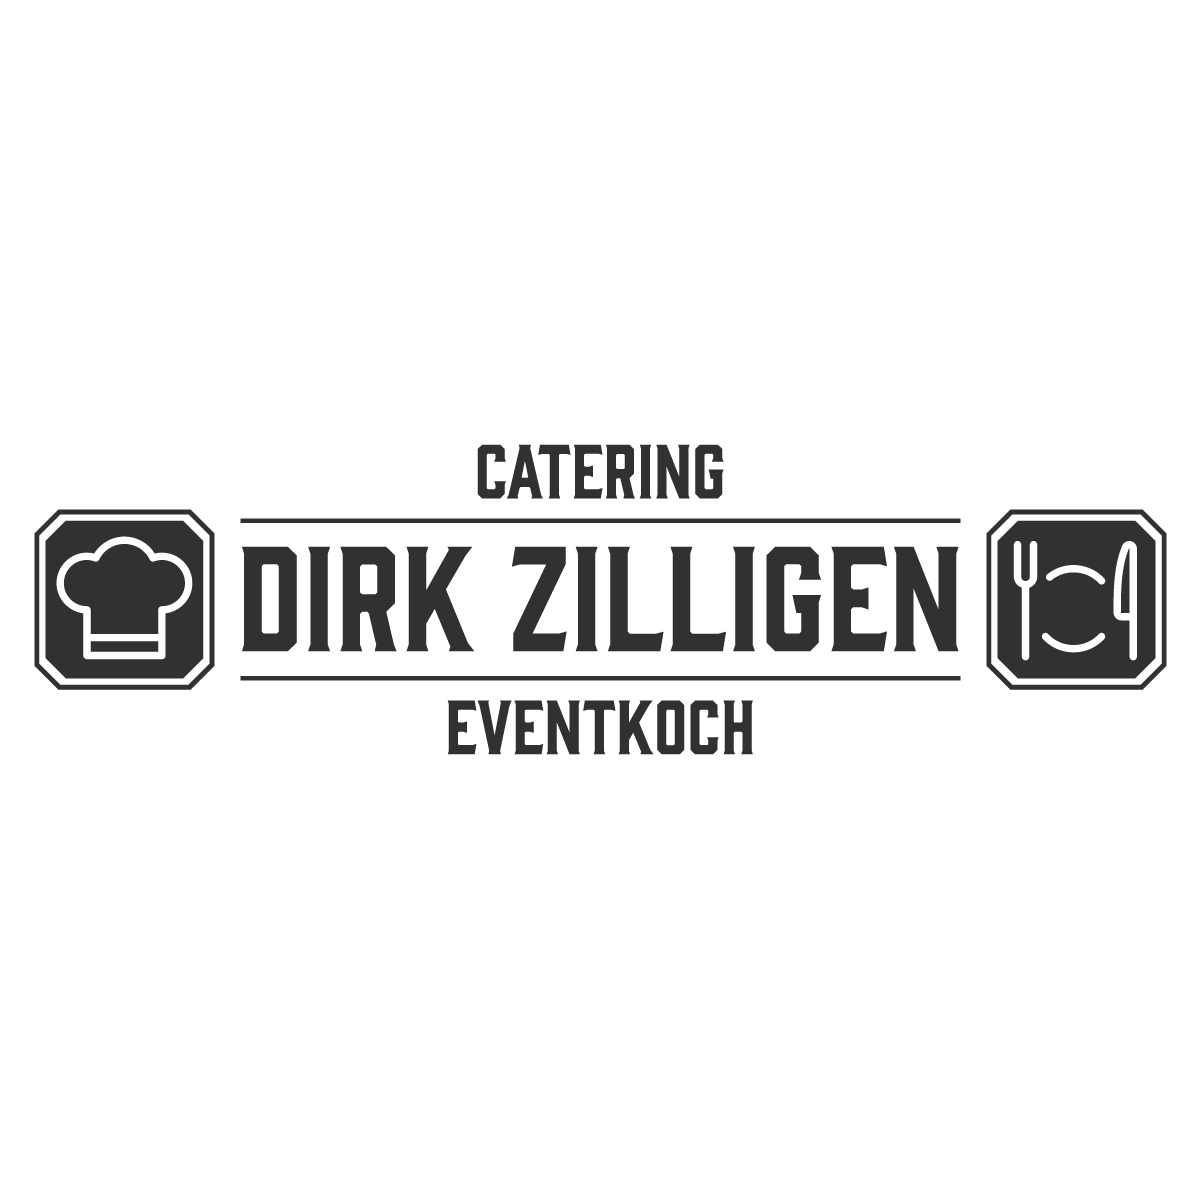 Dirk Johannes Zilligen Eventkoch/Catering Logo